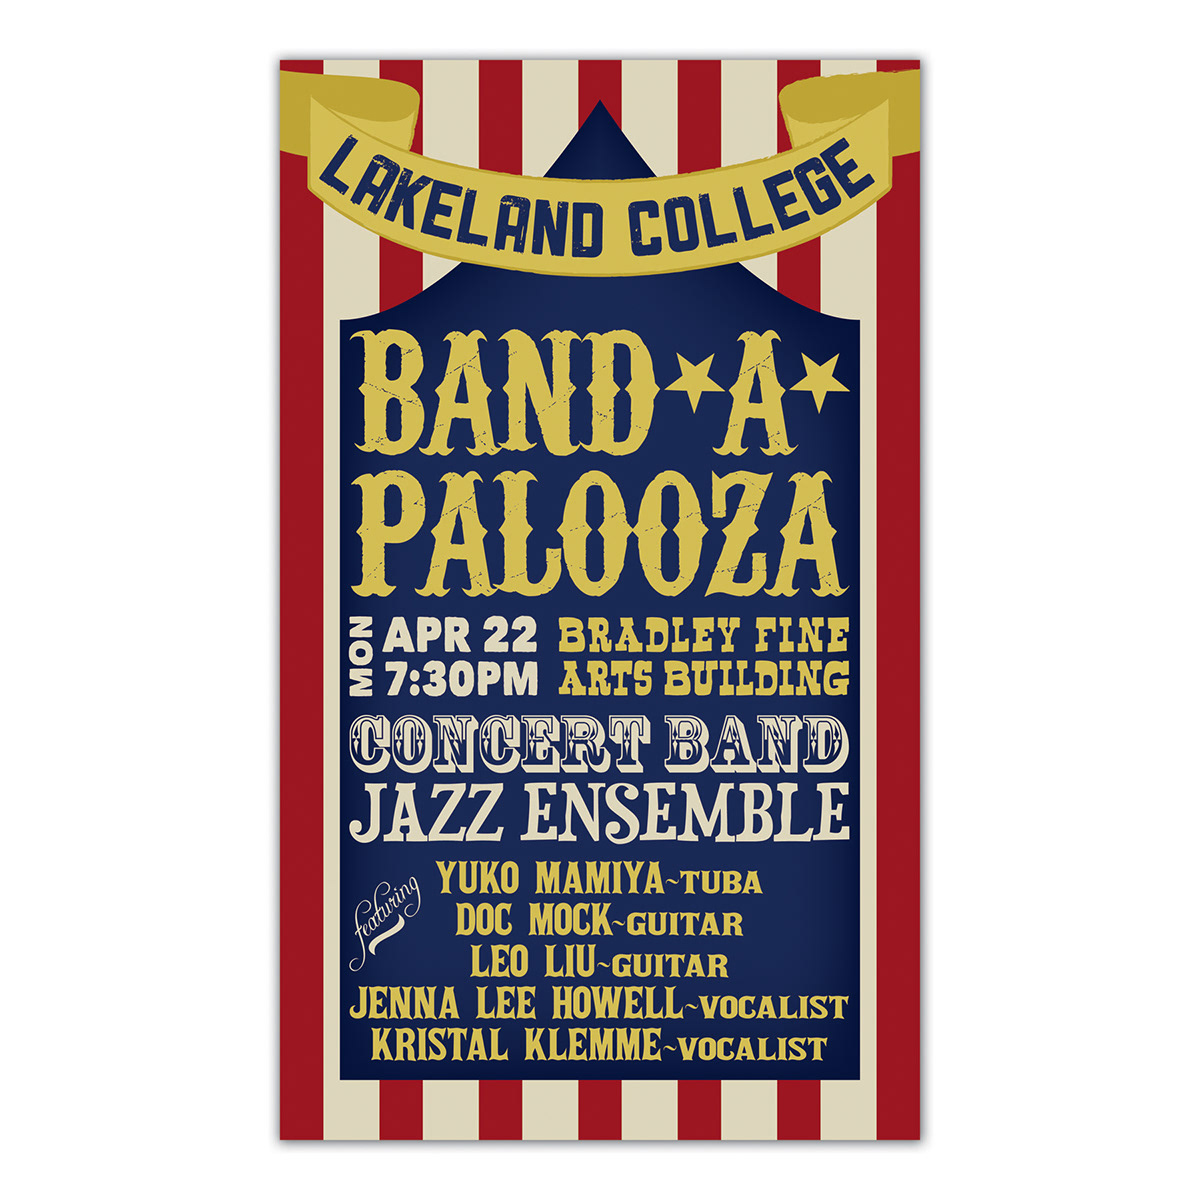 Lakeland College Circus band poster